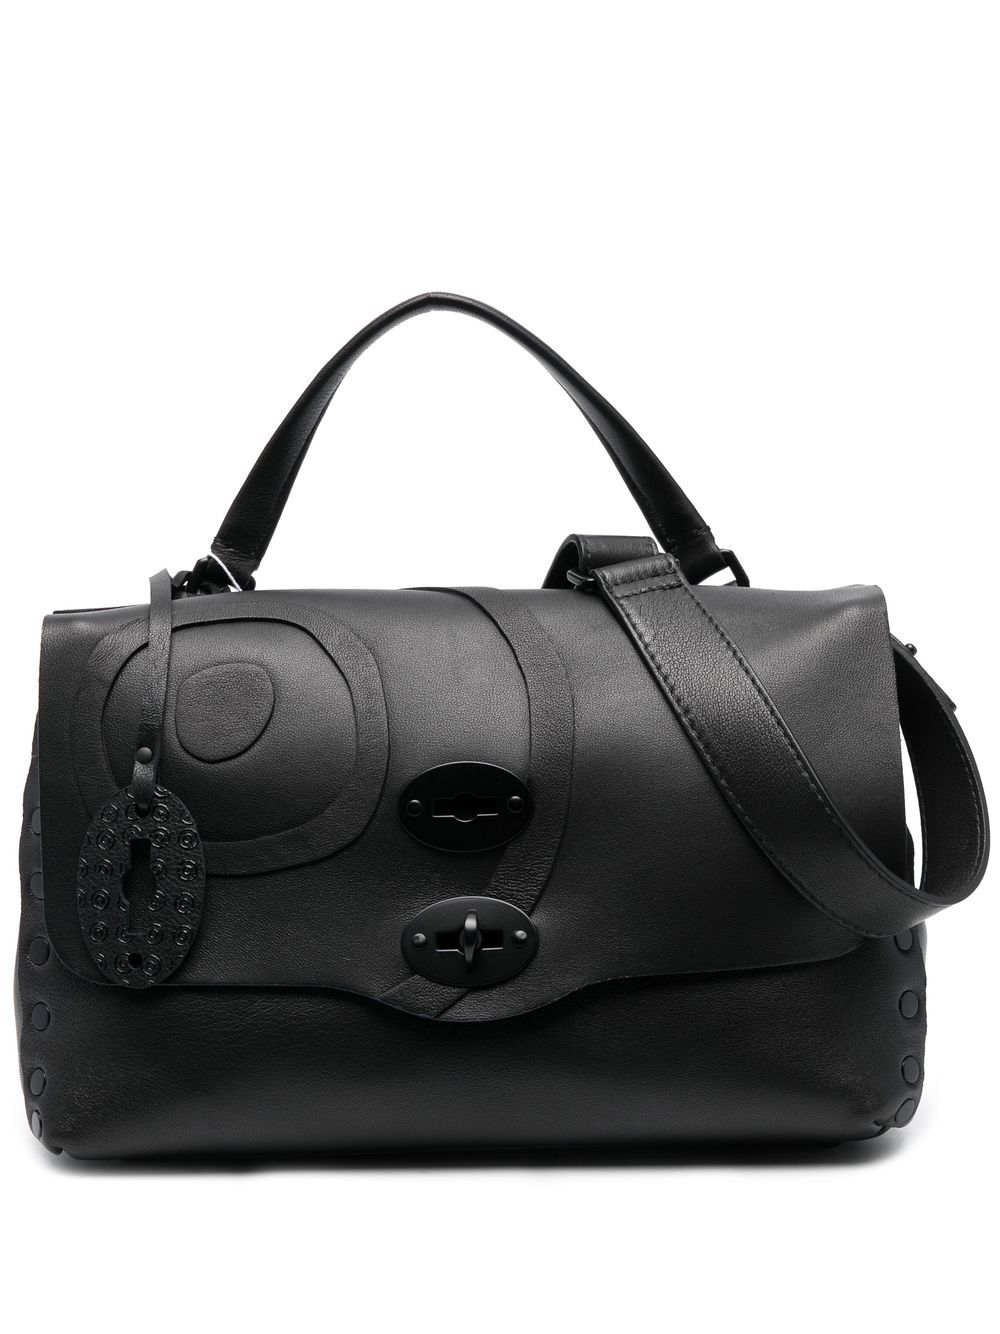 Image 1 of Zanellato foldover top leather satchel